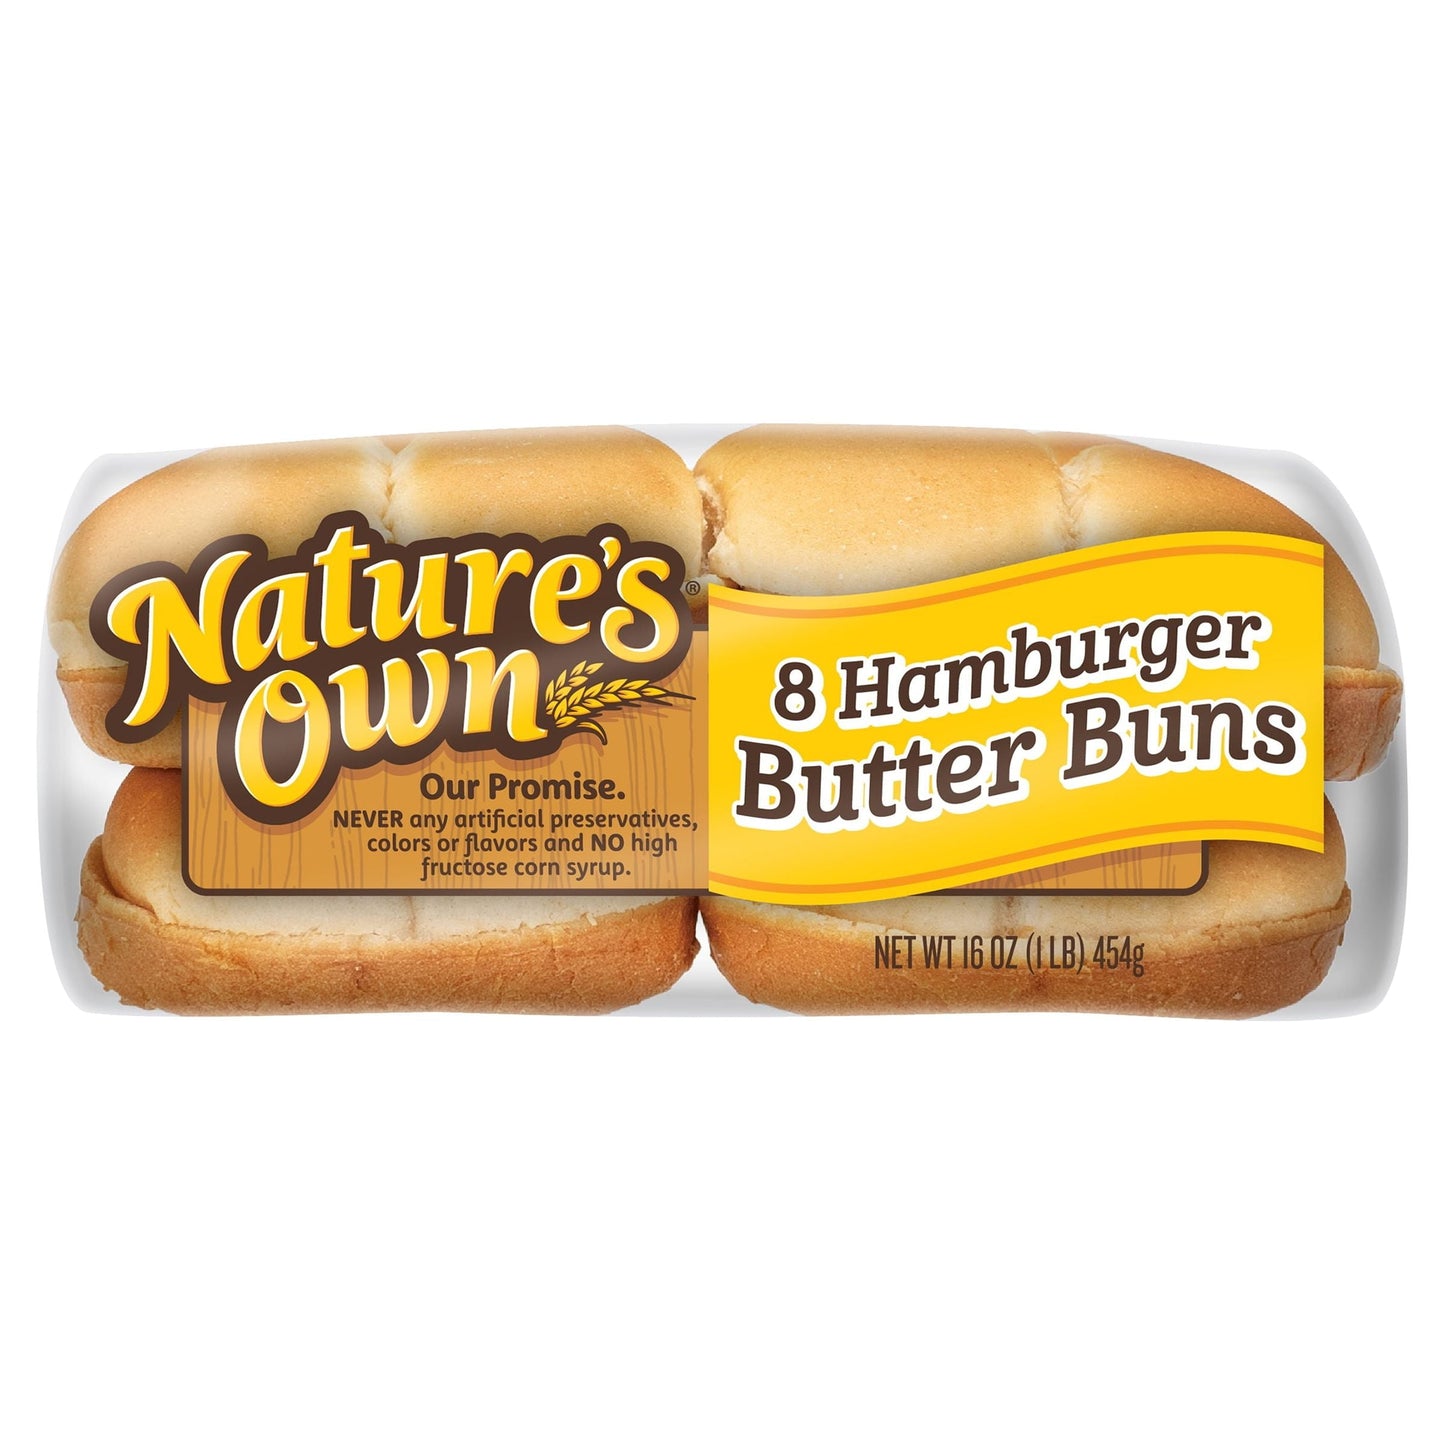 Nature's Own White Hamburger Butter Buns, 16 oz, 8 Count